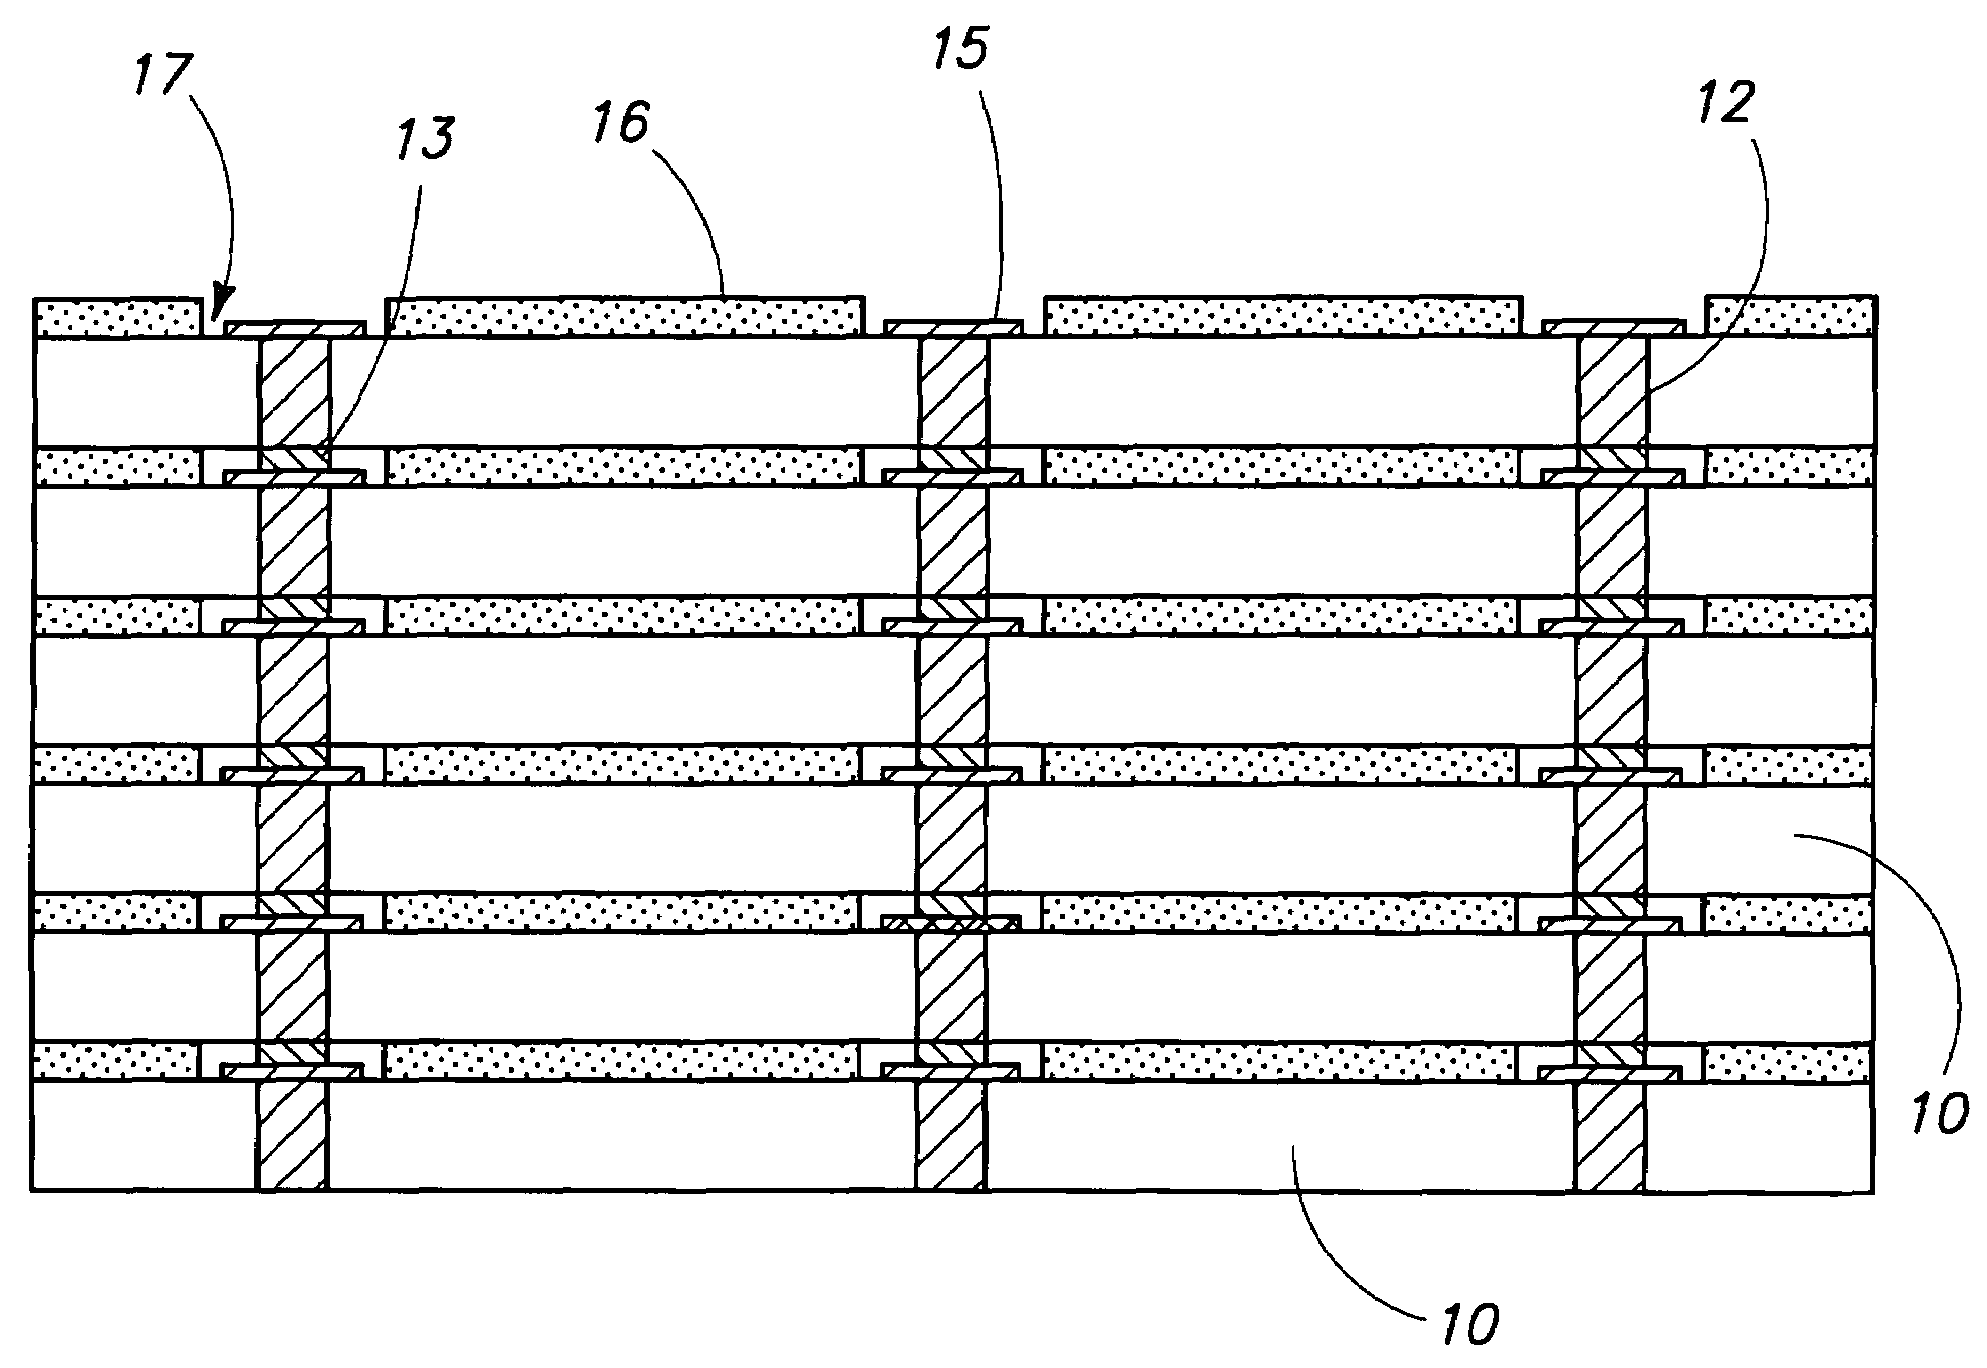 Bonding method for through-silicon-via based 3D wafer stacking